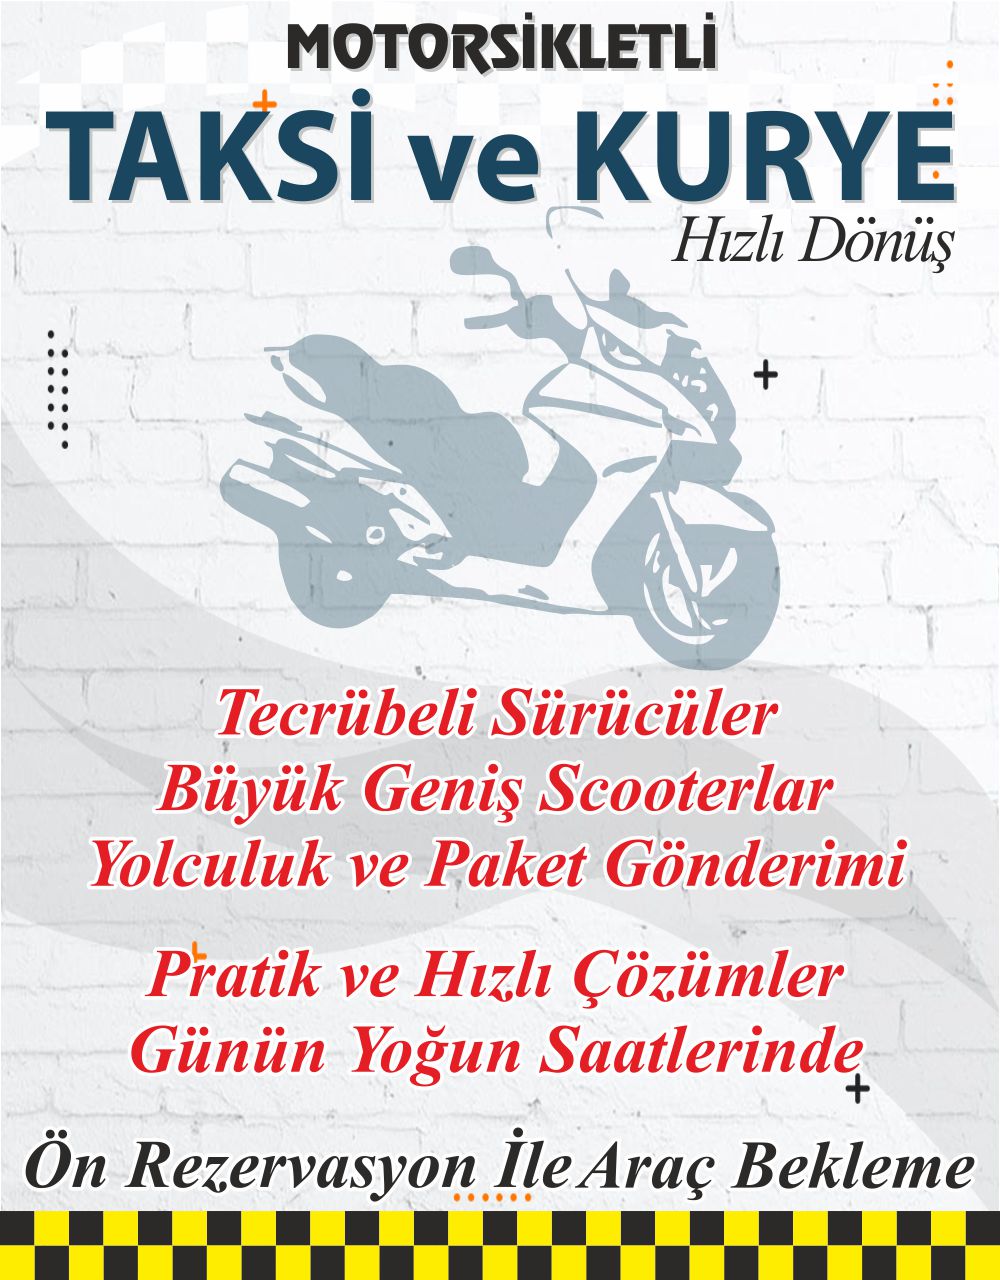 İstanbul Motorsiklet Taksi